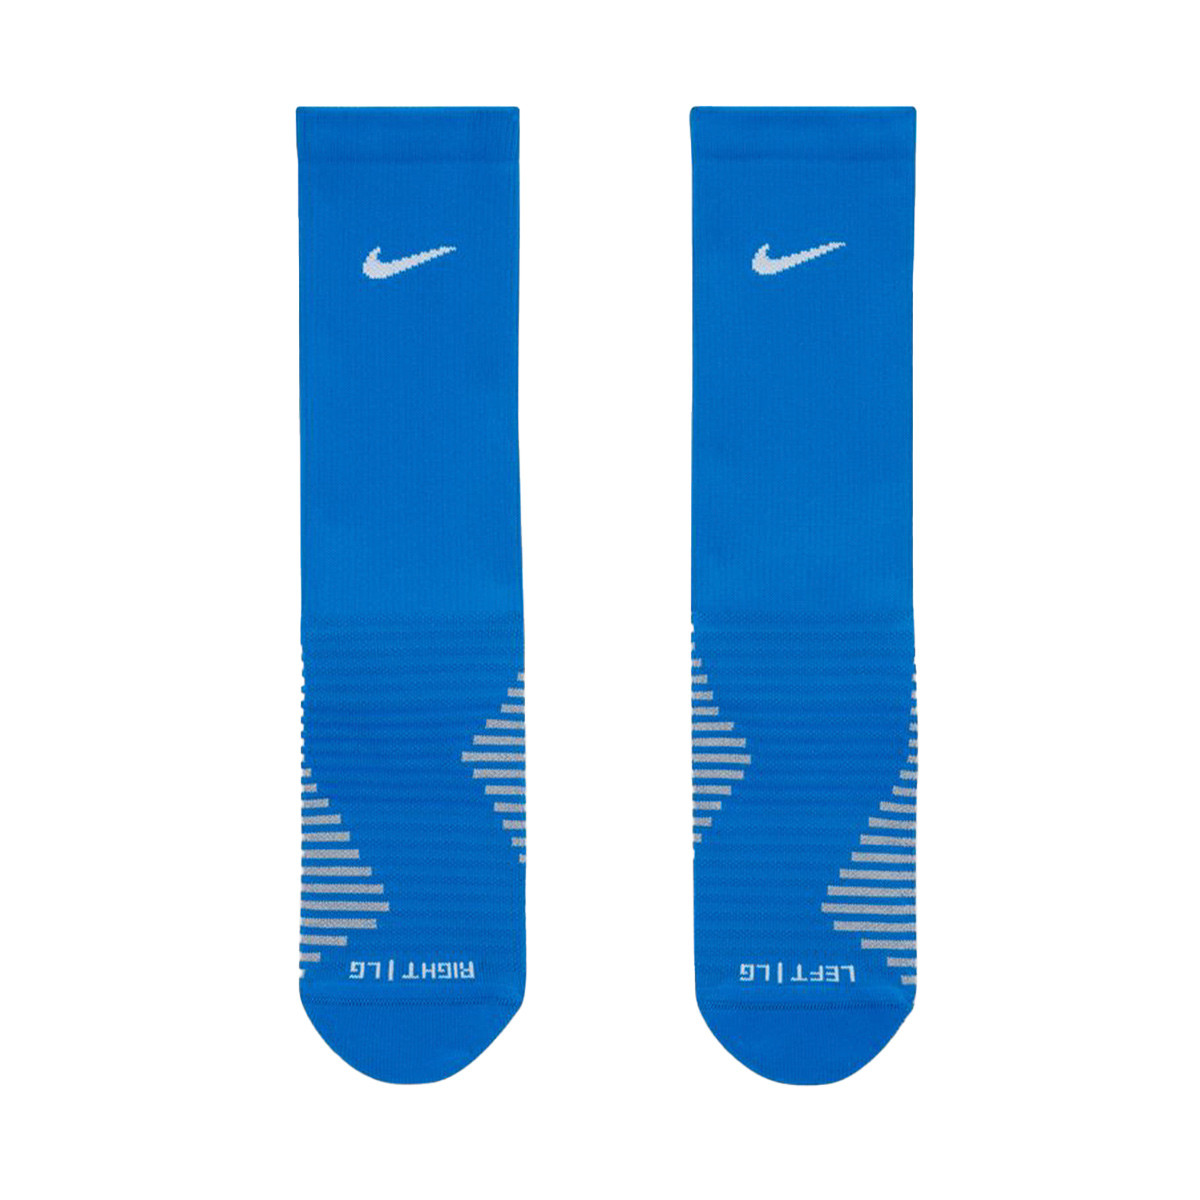 Socks Nike Strike Crew Royal Blue-White - Fútbol Emotion